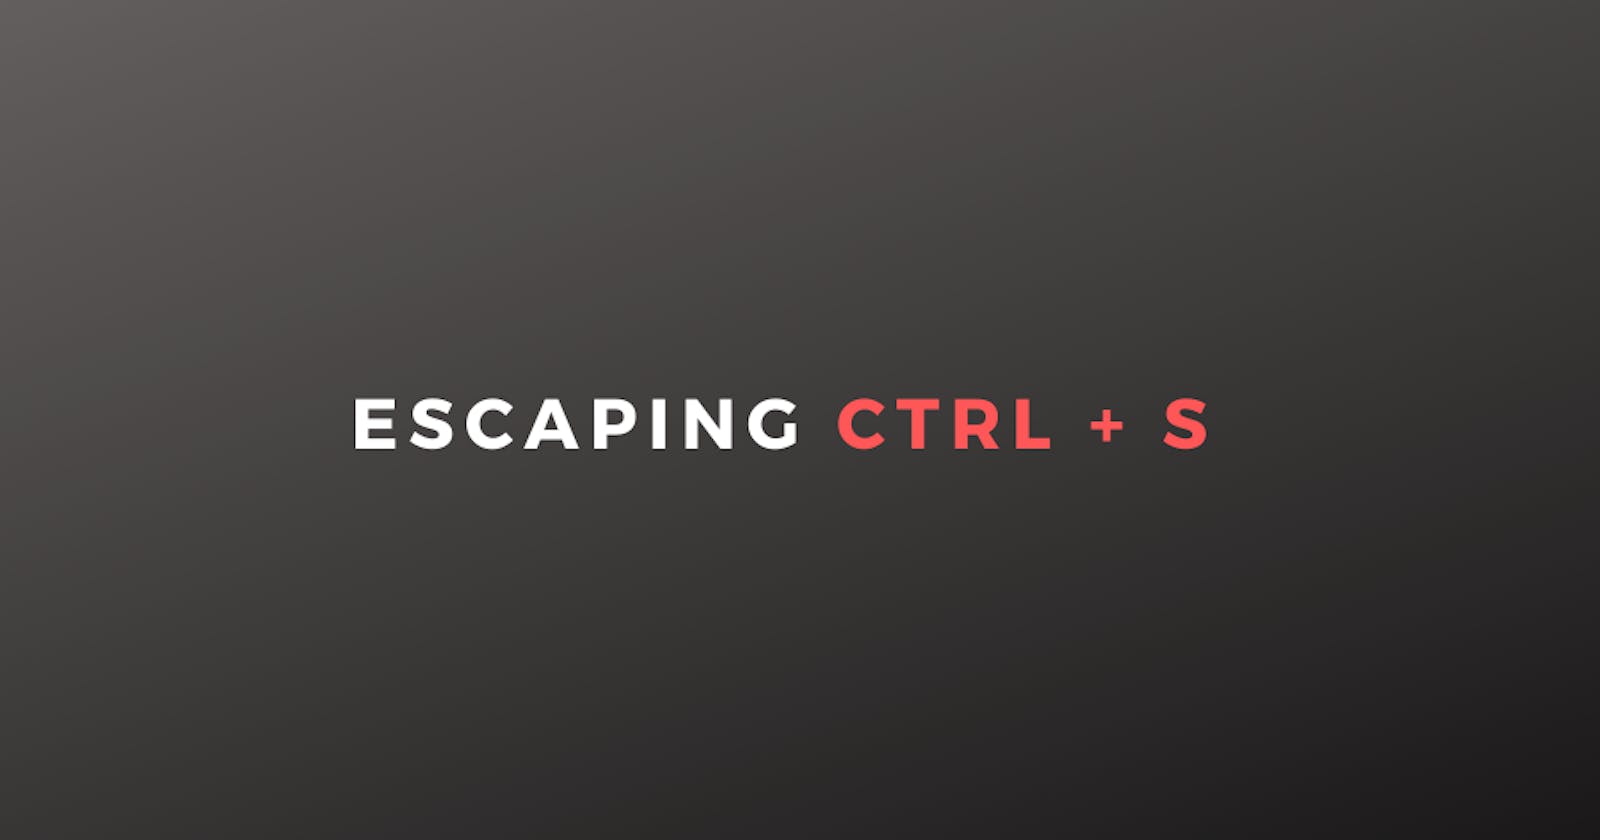 Escaping Ctrl + S in Vs Code